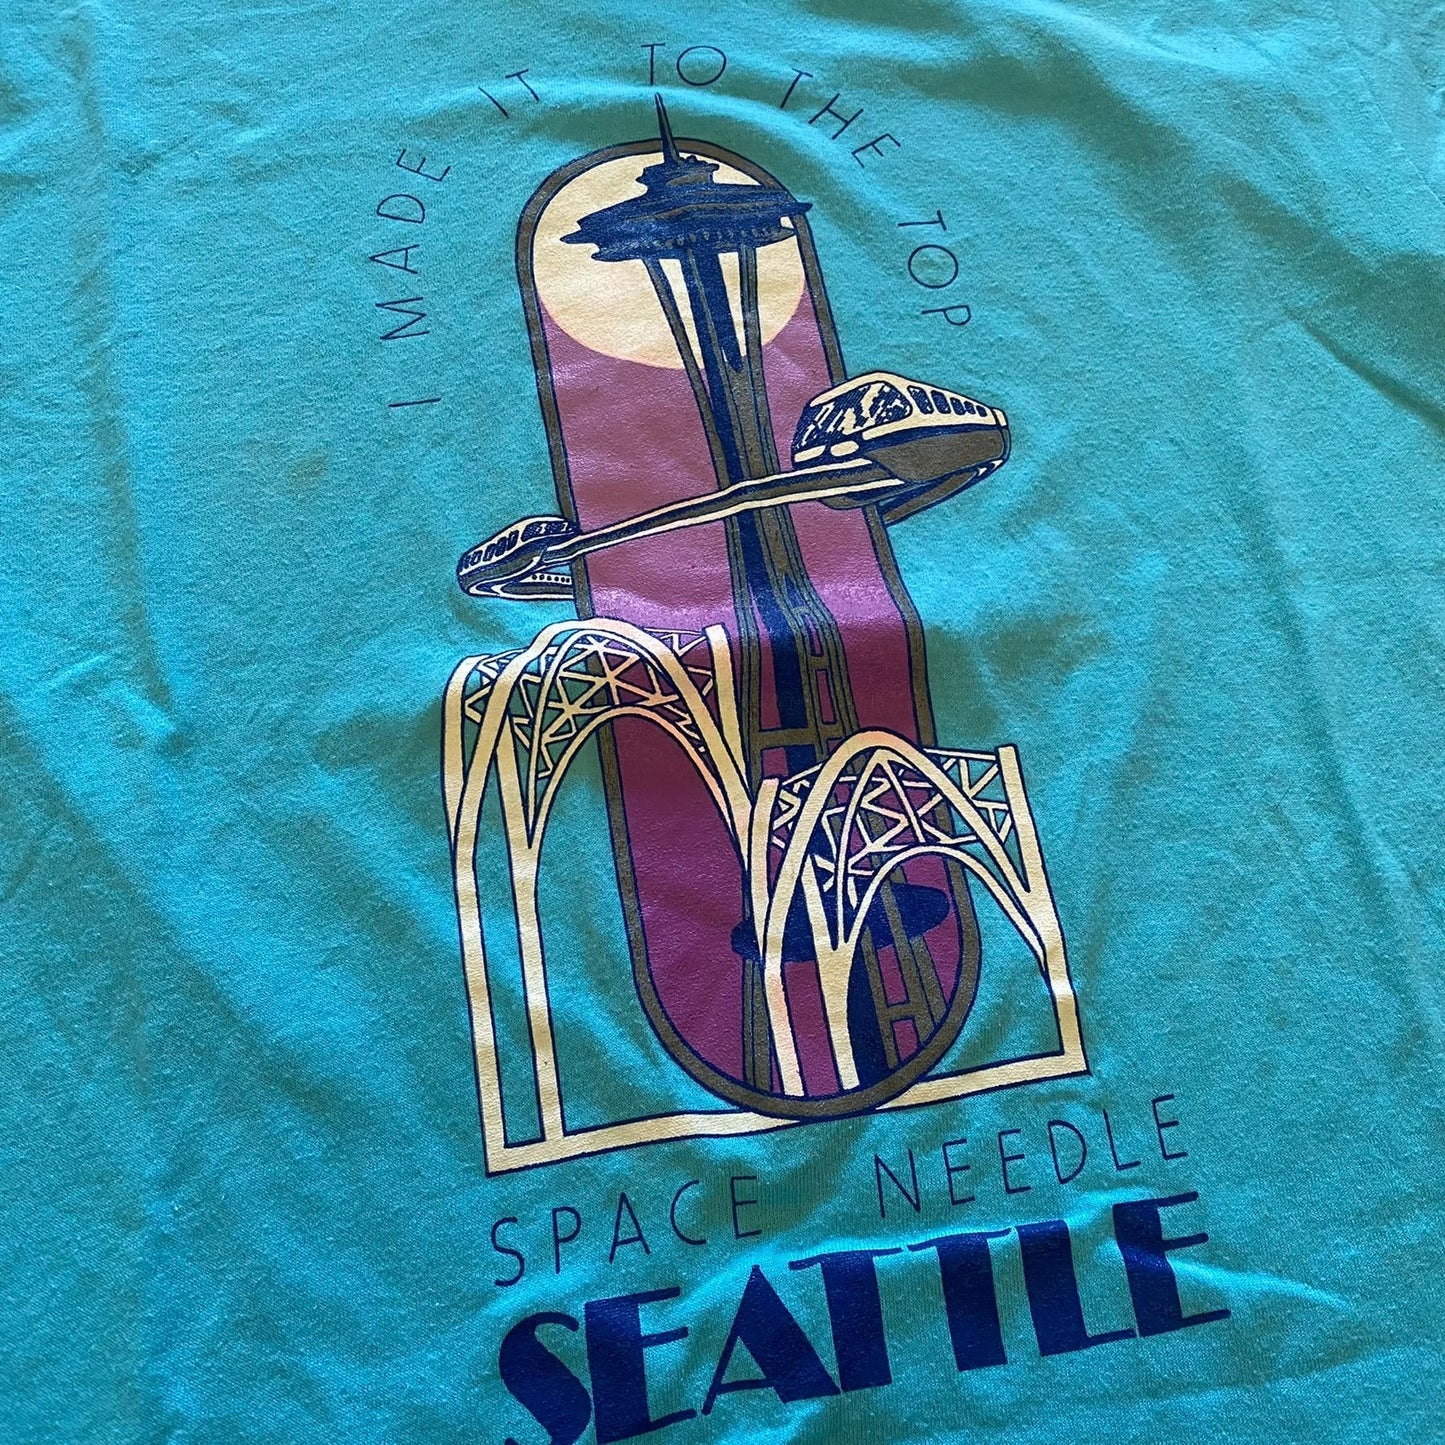 Seattle Space Needle Vintage T-Shirt